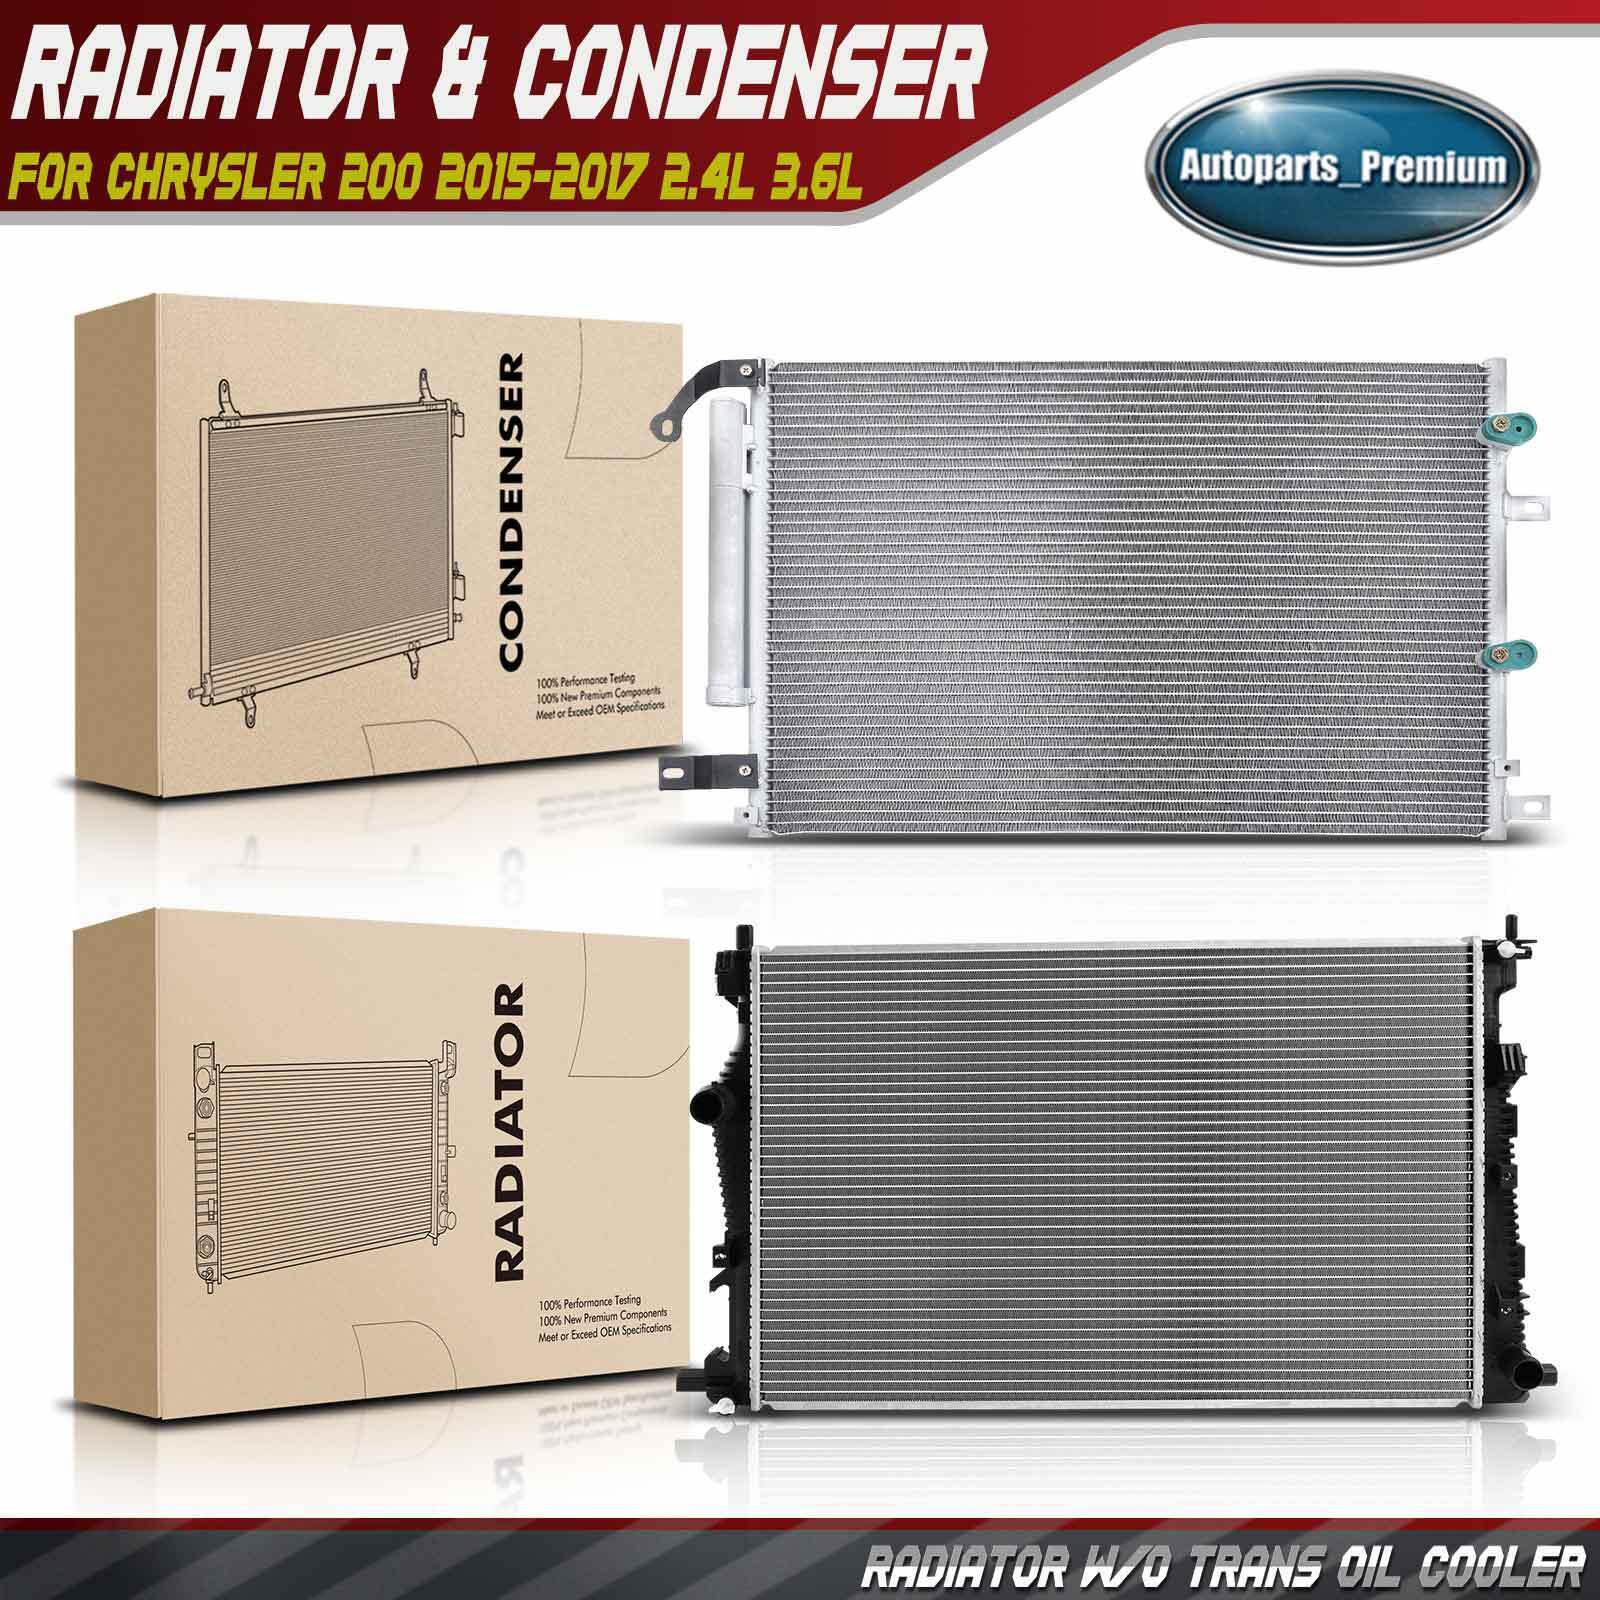 Radiator & AC Condenser Cooling Kit for Chrysler 200 2015 2016 2017 L4 2.4L 3.6L